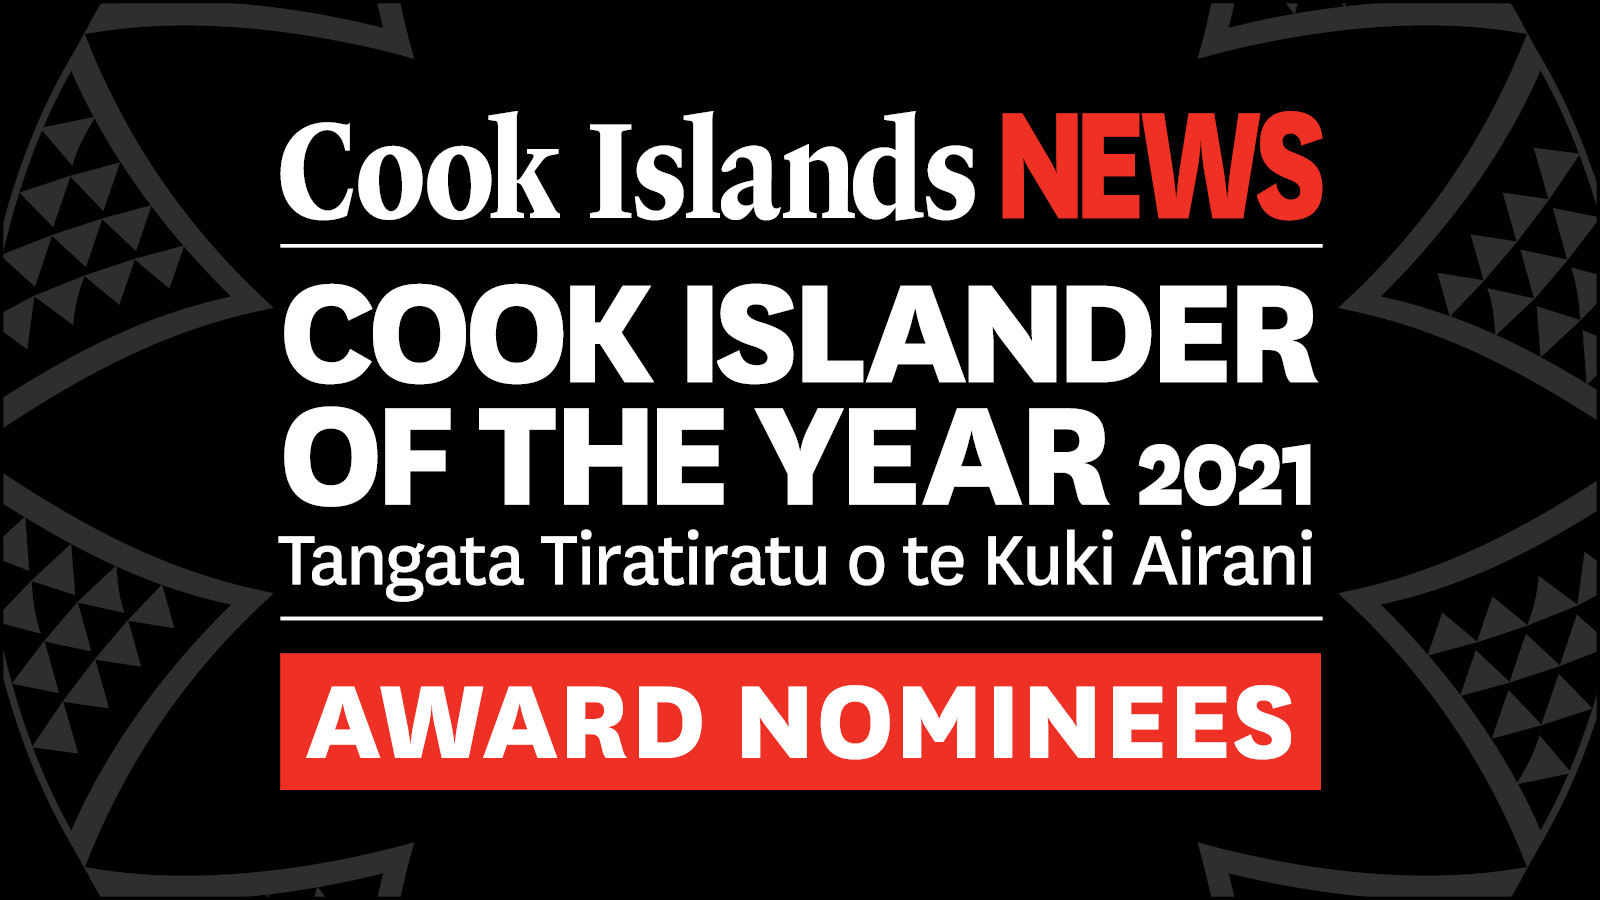 Cook Islands News’ Cook Islander of the Year 2021 nominees